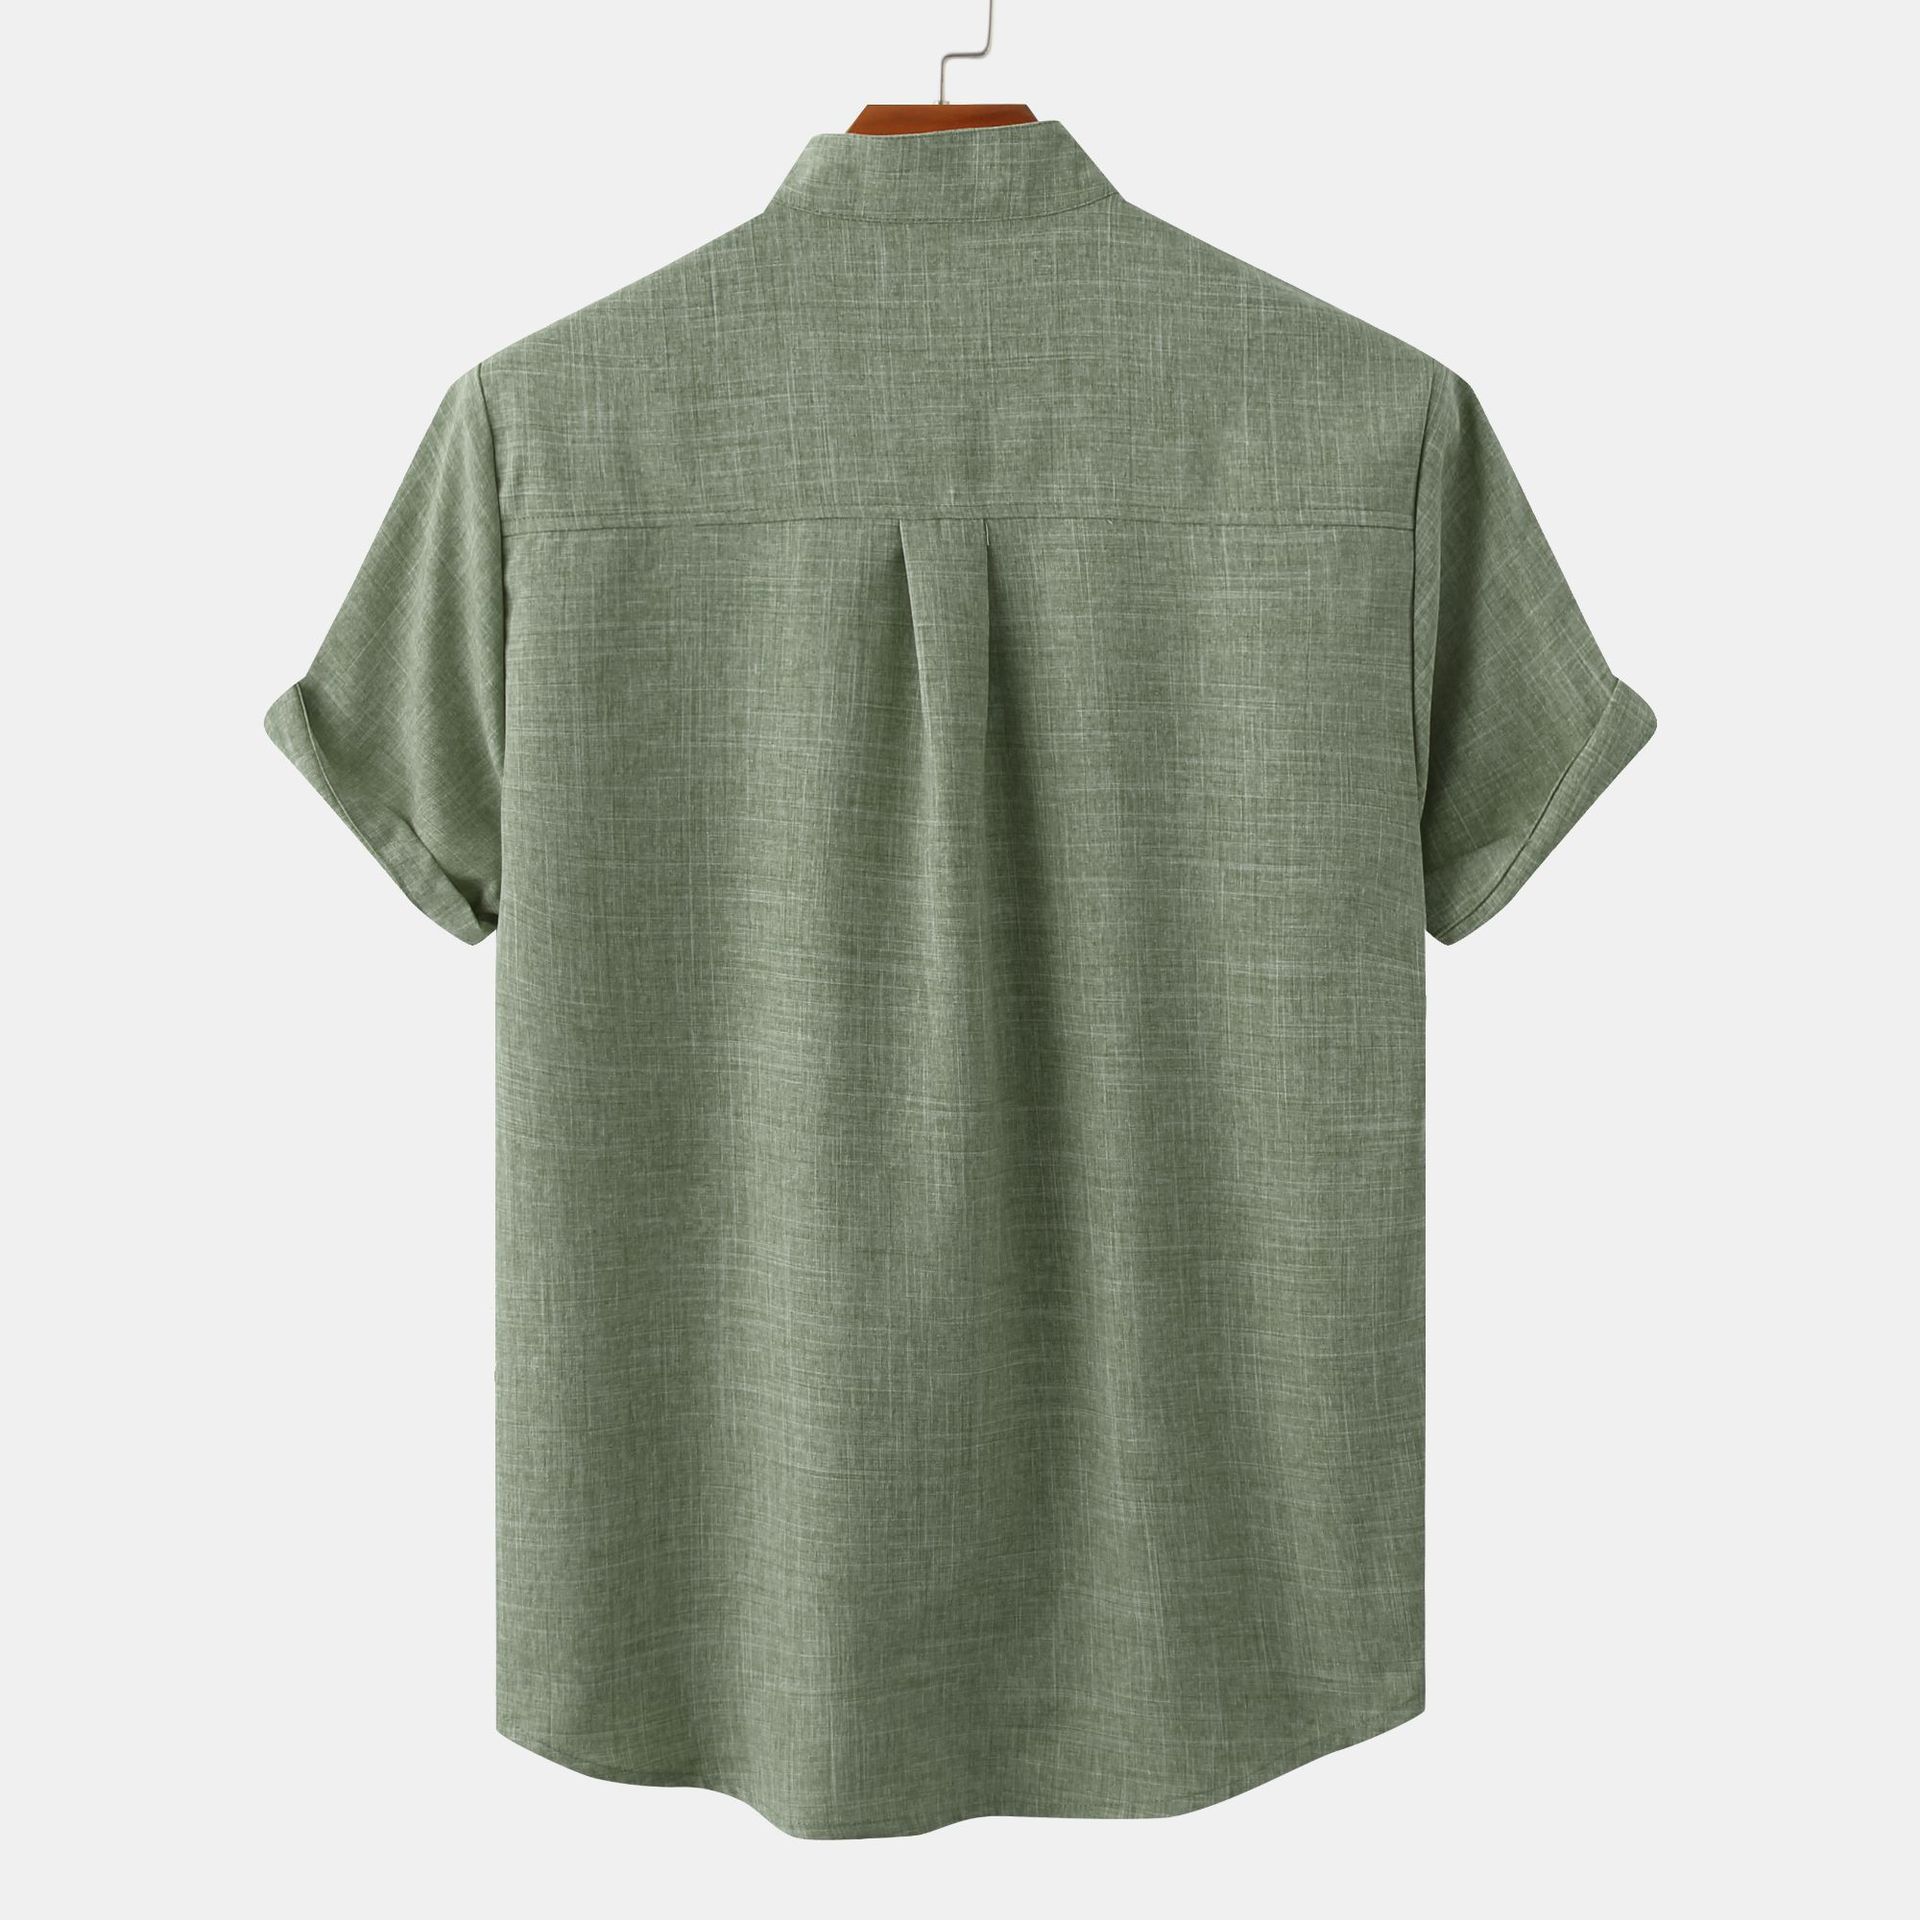 Mens Shirts Cotton Blend 자수 블라우스 짧은 슬리브 Cargdian Sull Color Slim Fit 캐주얼 비즈니스 의류 싱글 가슴 셔츠 다중 색상 크기 M-3XL